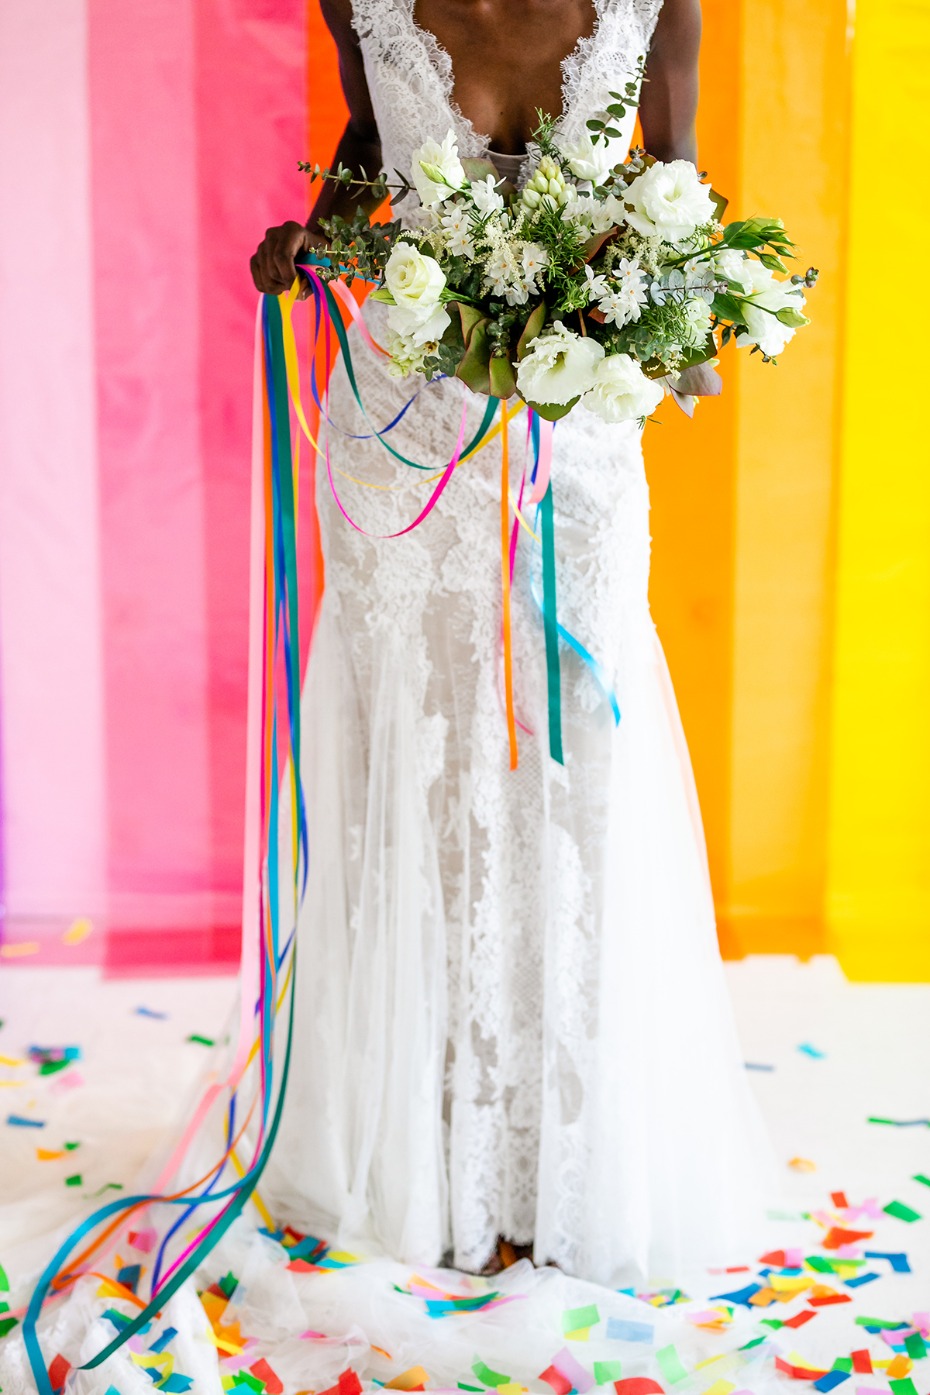 add rainbows to your wedding day